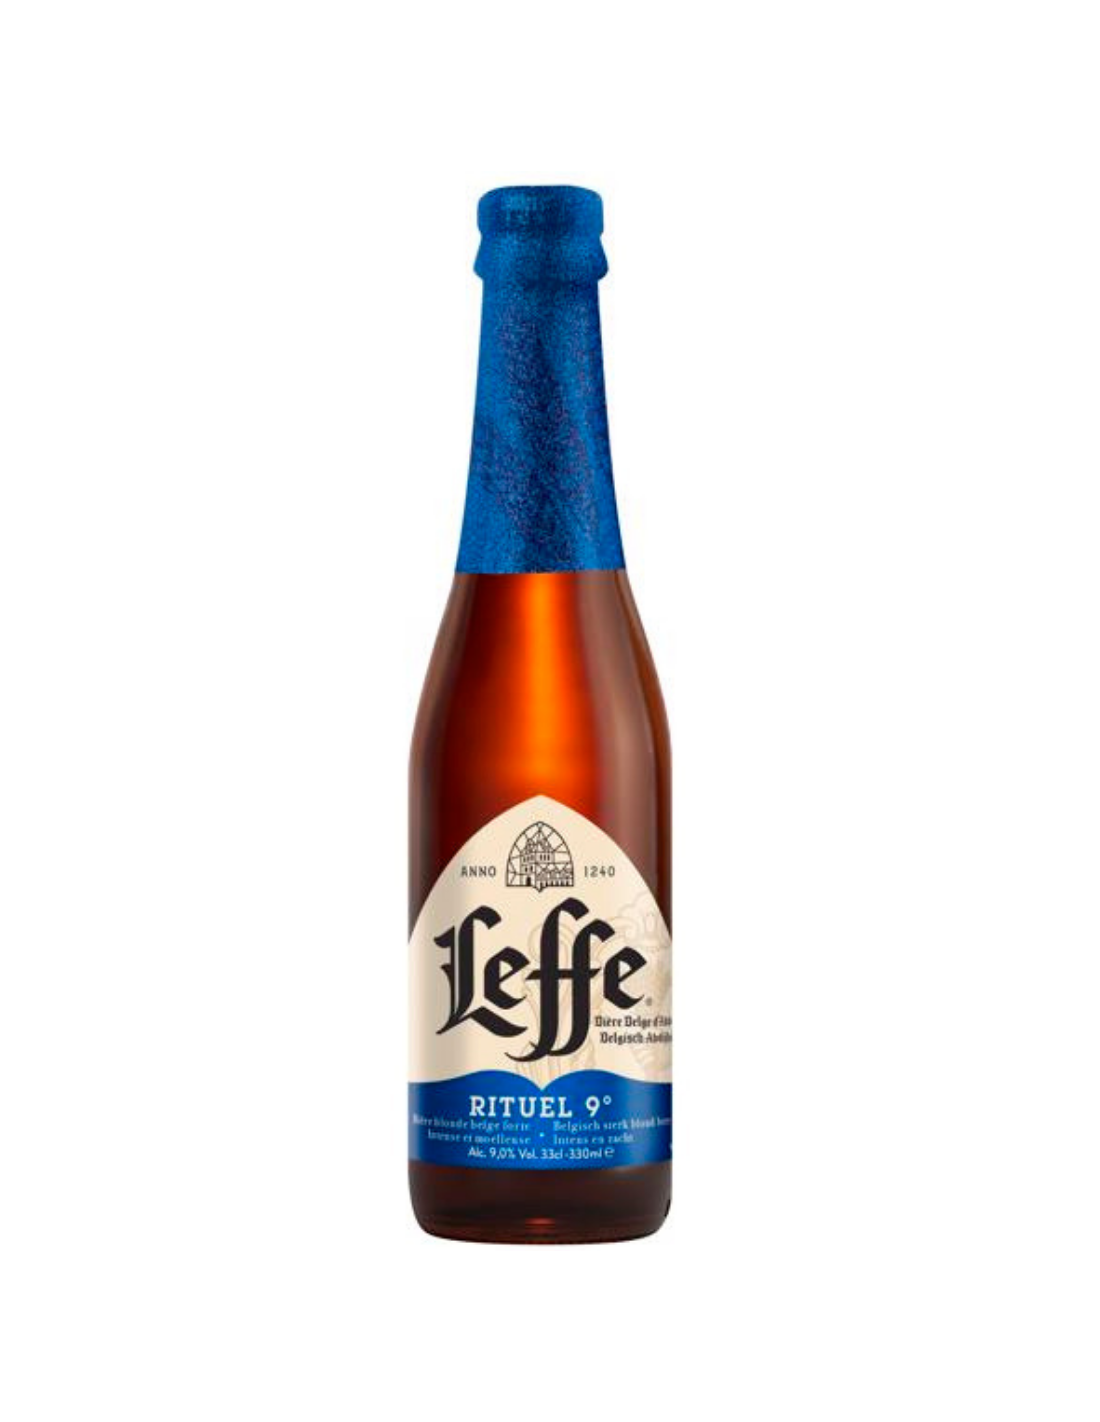 Bere blonda, filtrata Leffe Rituel 9˚, 9% alc., 0.33L, Belgia alcooldiscount.ro